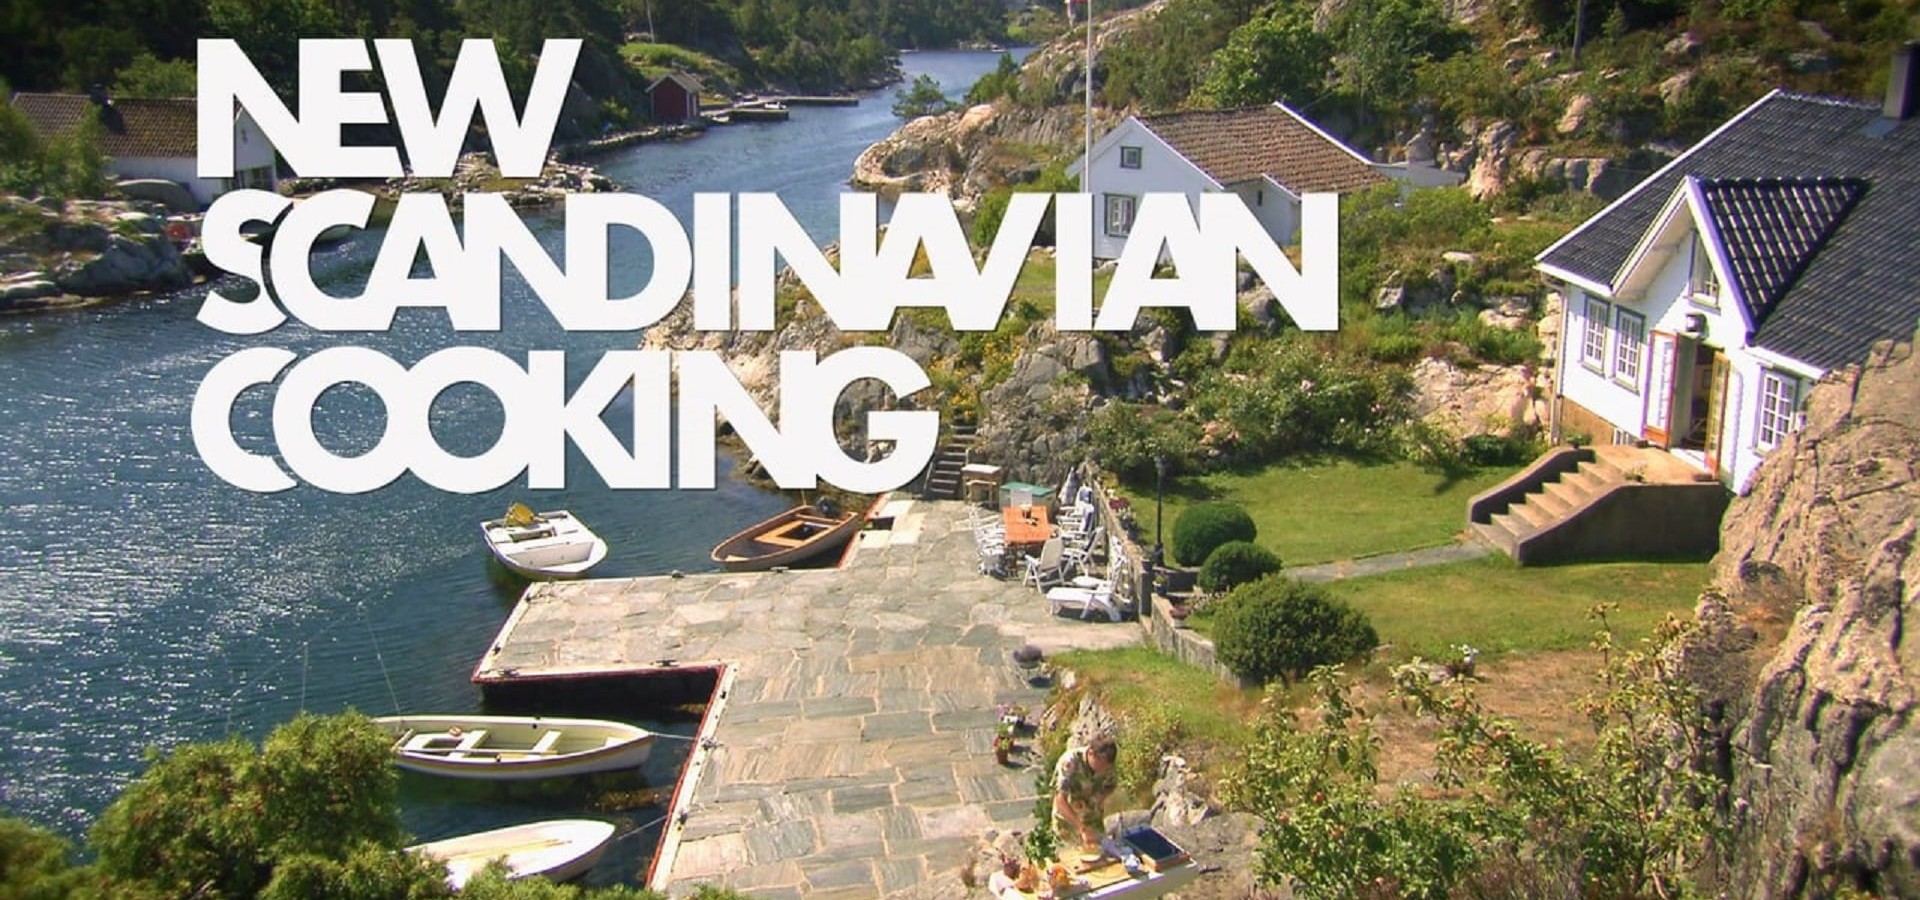 New Scandinavian Cooking Season 10 episodes streaming online